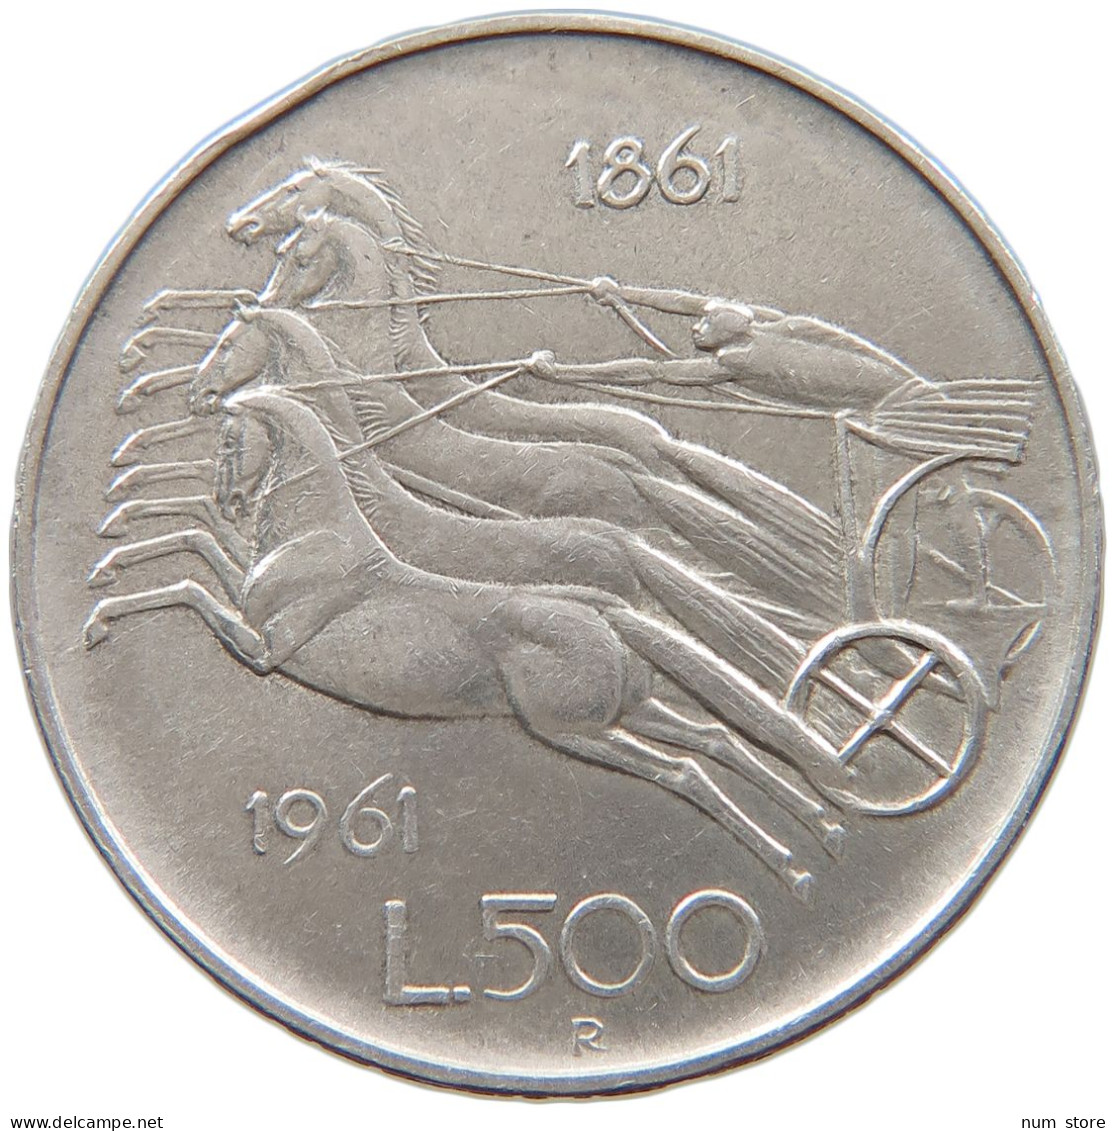 ITALY 500 LIRE 1961  #c068 0355 - 500 Liras